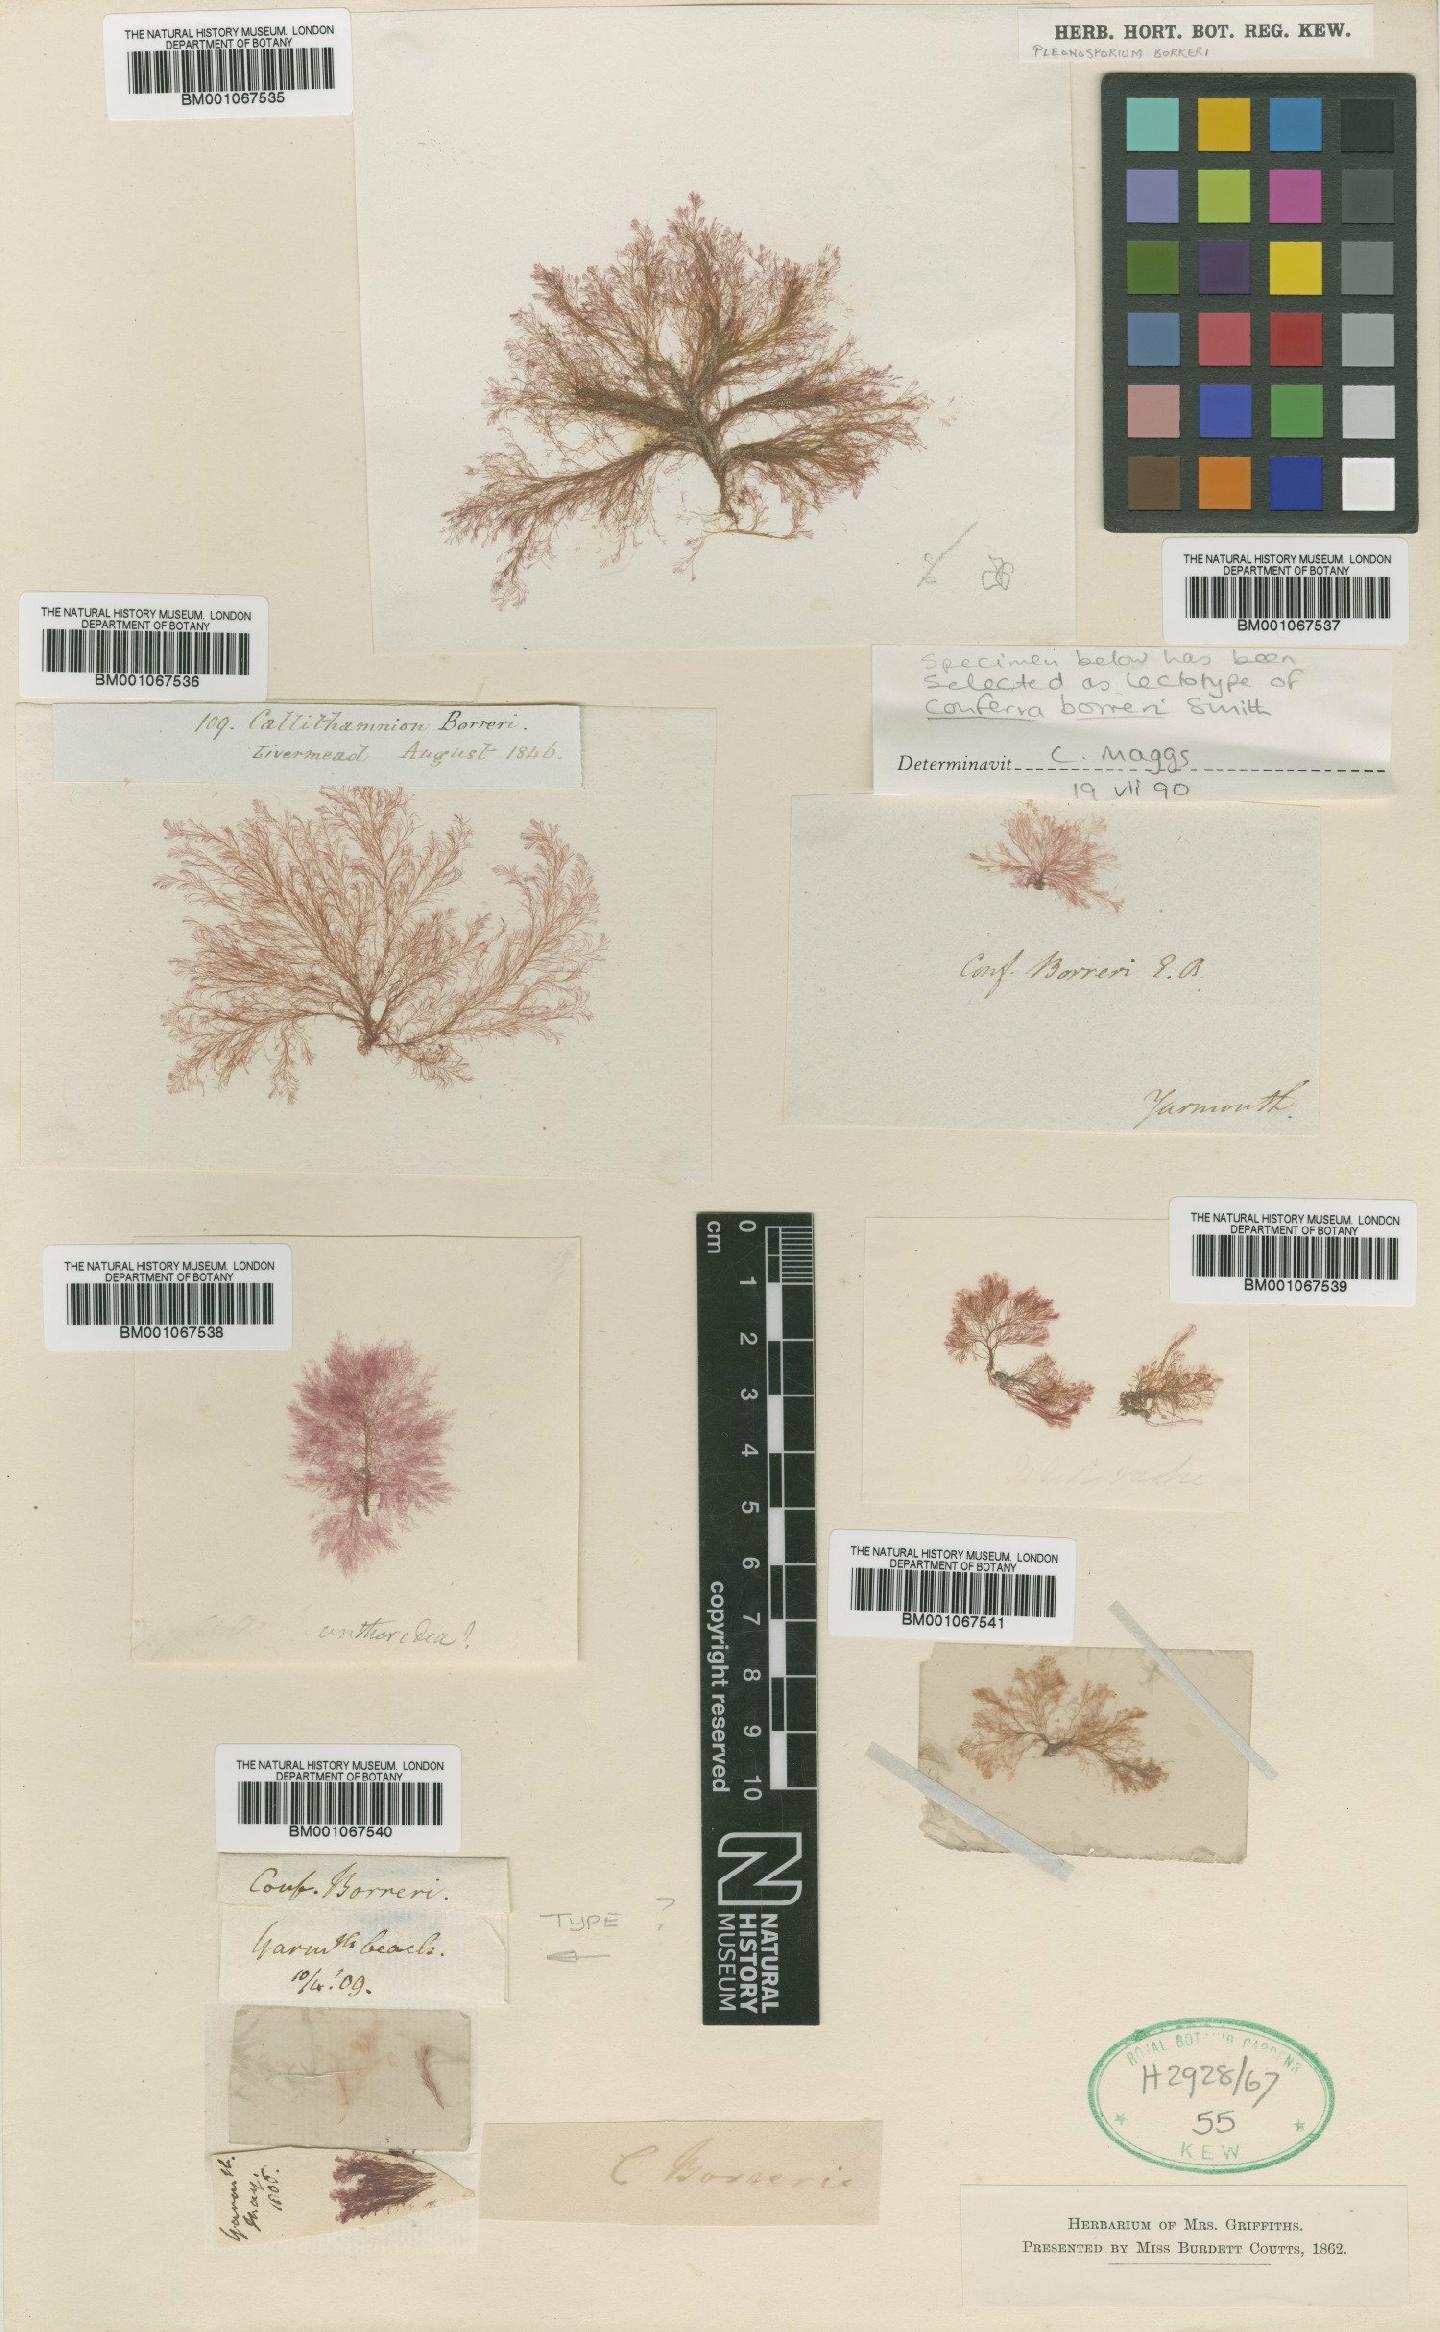 To NHMUK collection (Pleonosporium borreri (Sm.) Nägeli; Lectotype; NHMUK:ecatalogue:2300163)